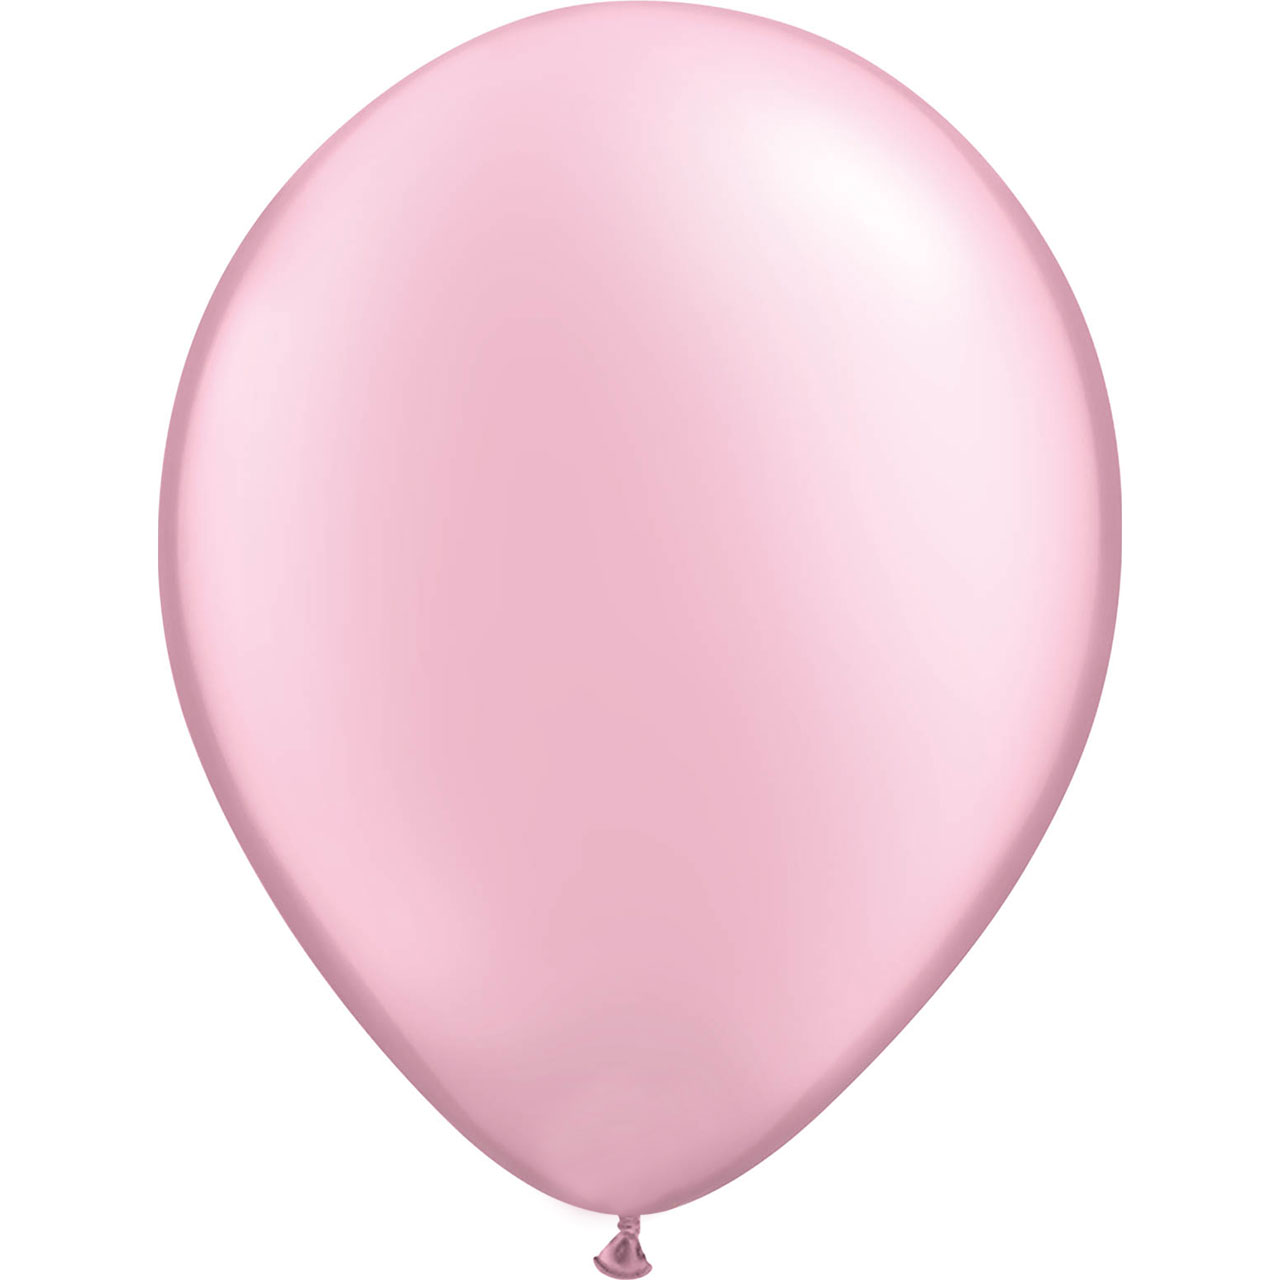 3 Ballons Pearl Rosa - Large 40cm